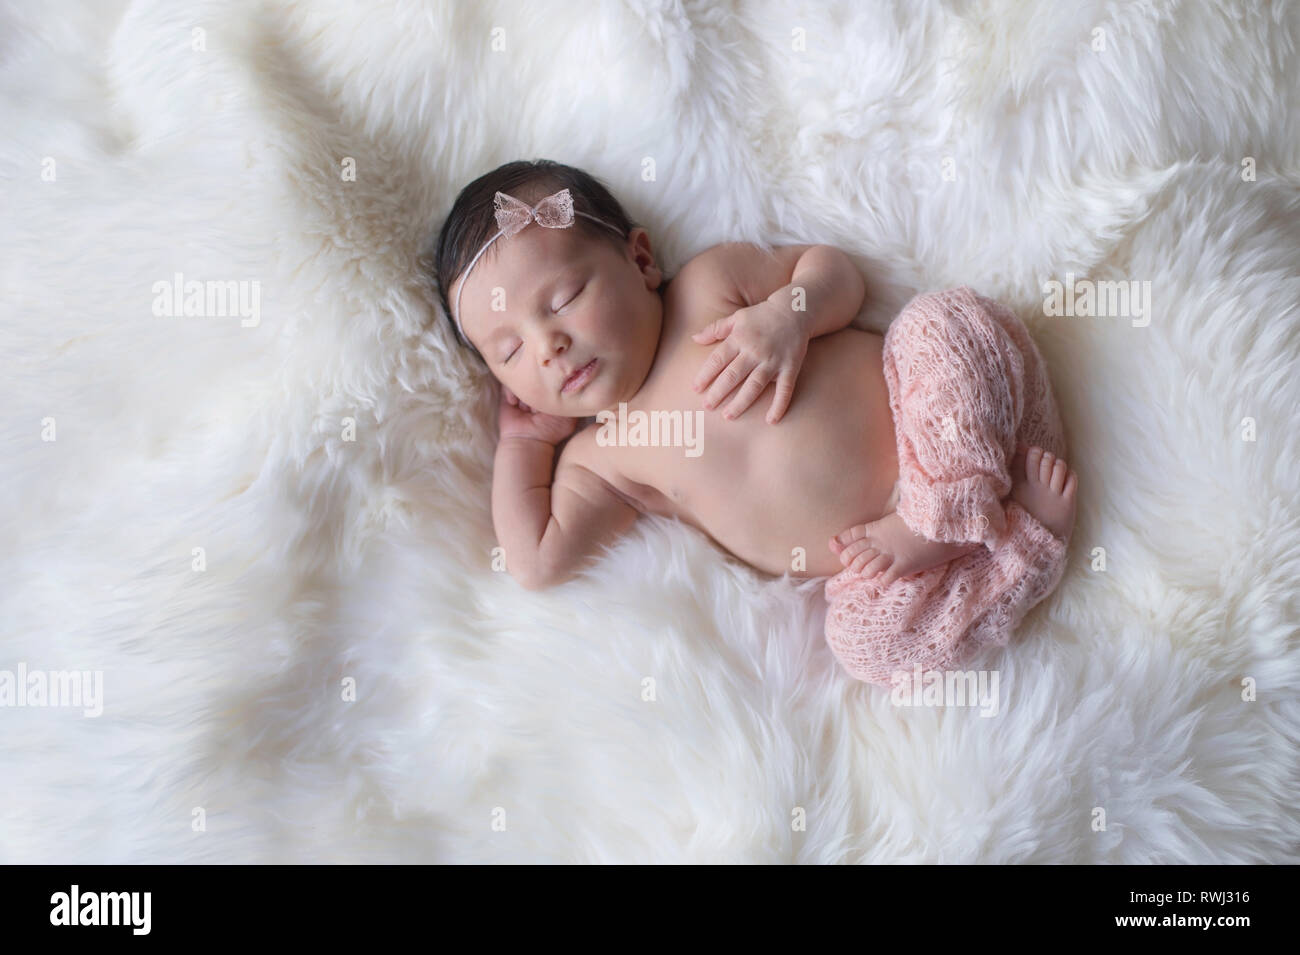 Sleeping, week old newborn baby girl wearing light pink, knitted pants. Shot in the studio on a white sheepskin rug. Stock Photo